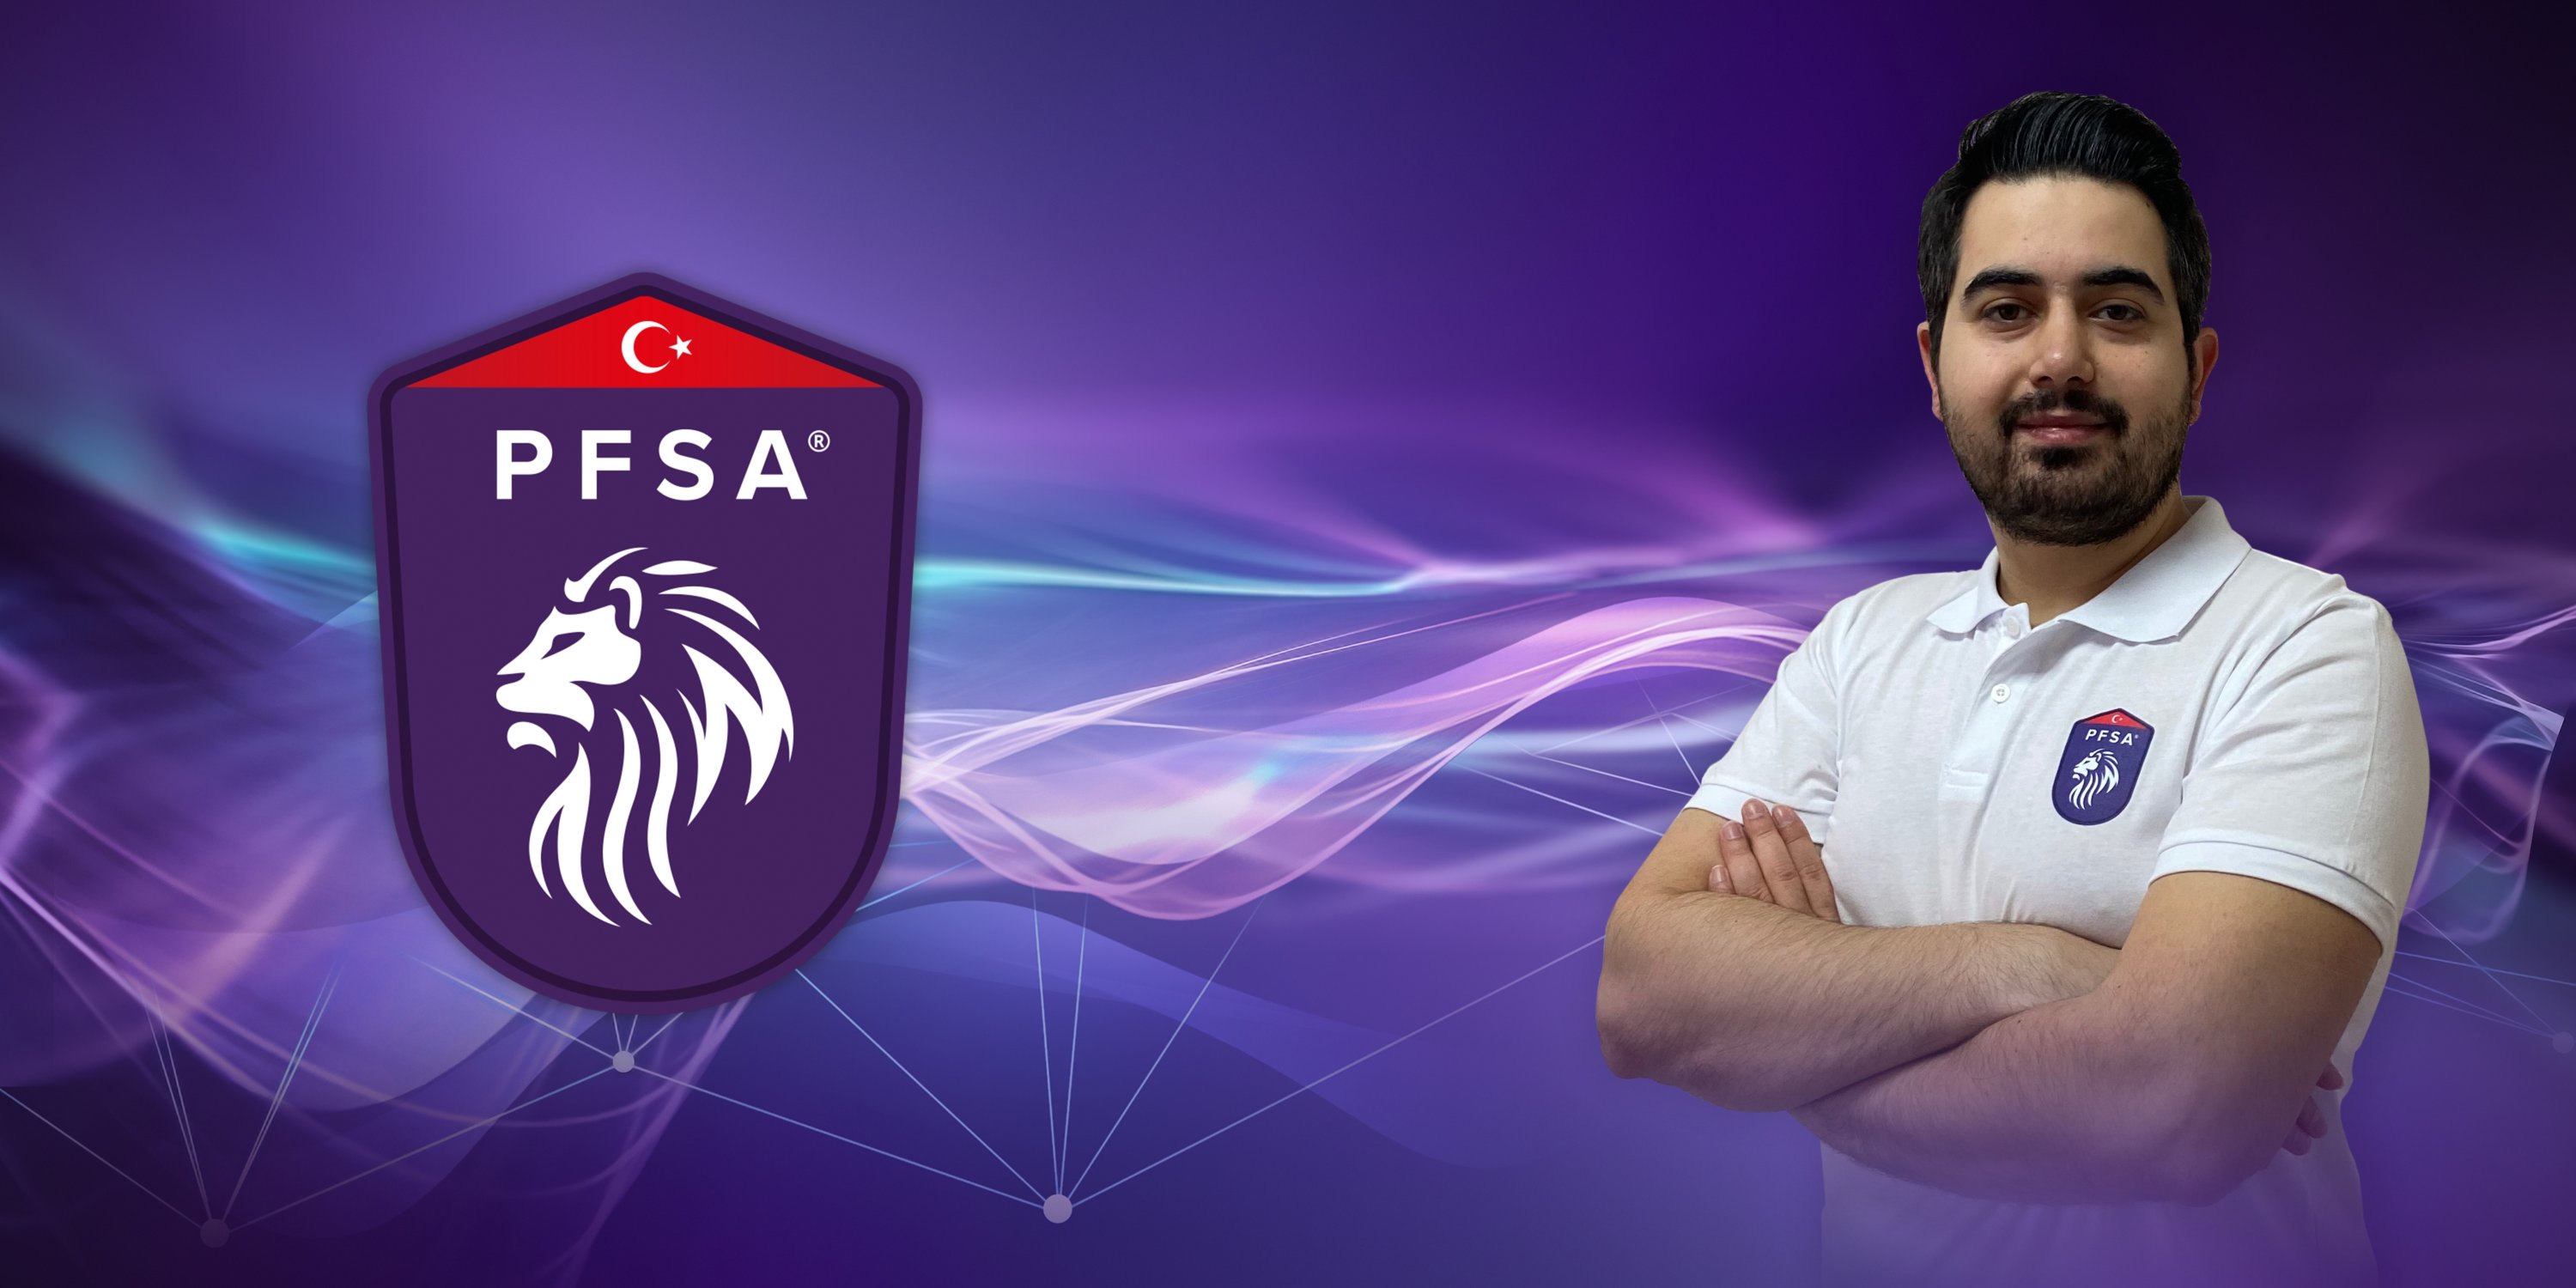 PFSA Türkiye Director Mert Tümöz alongside the scouting network's logo.